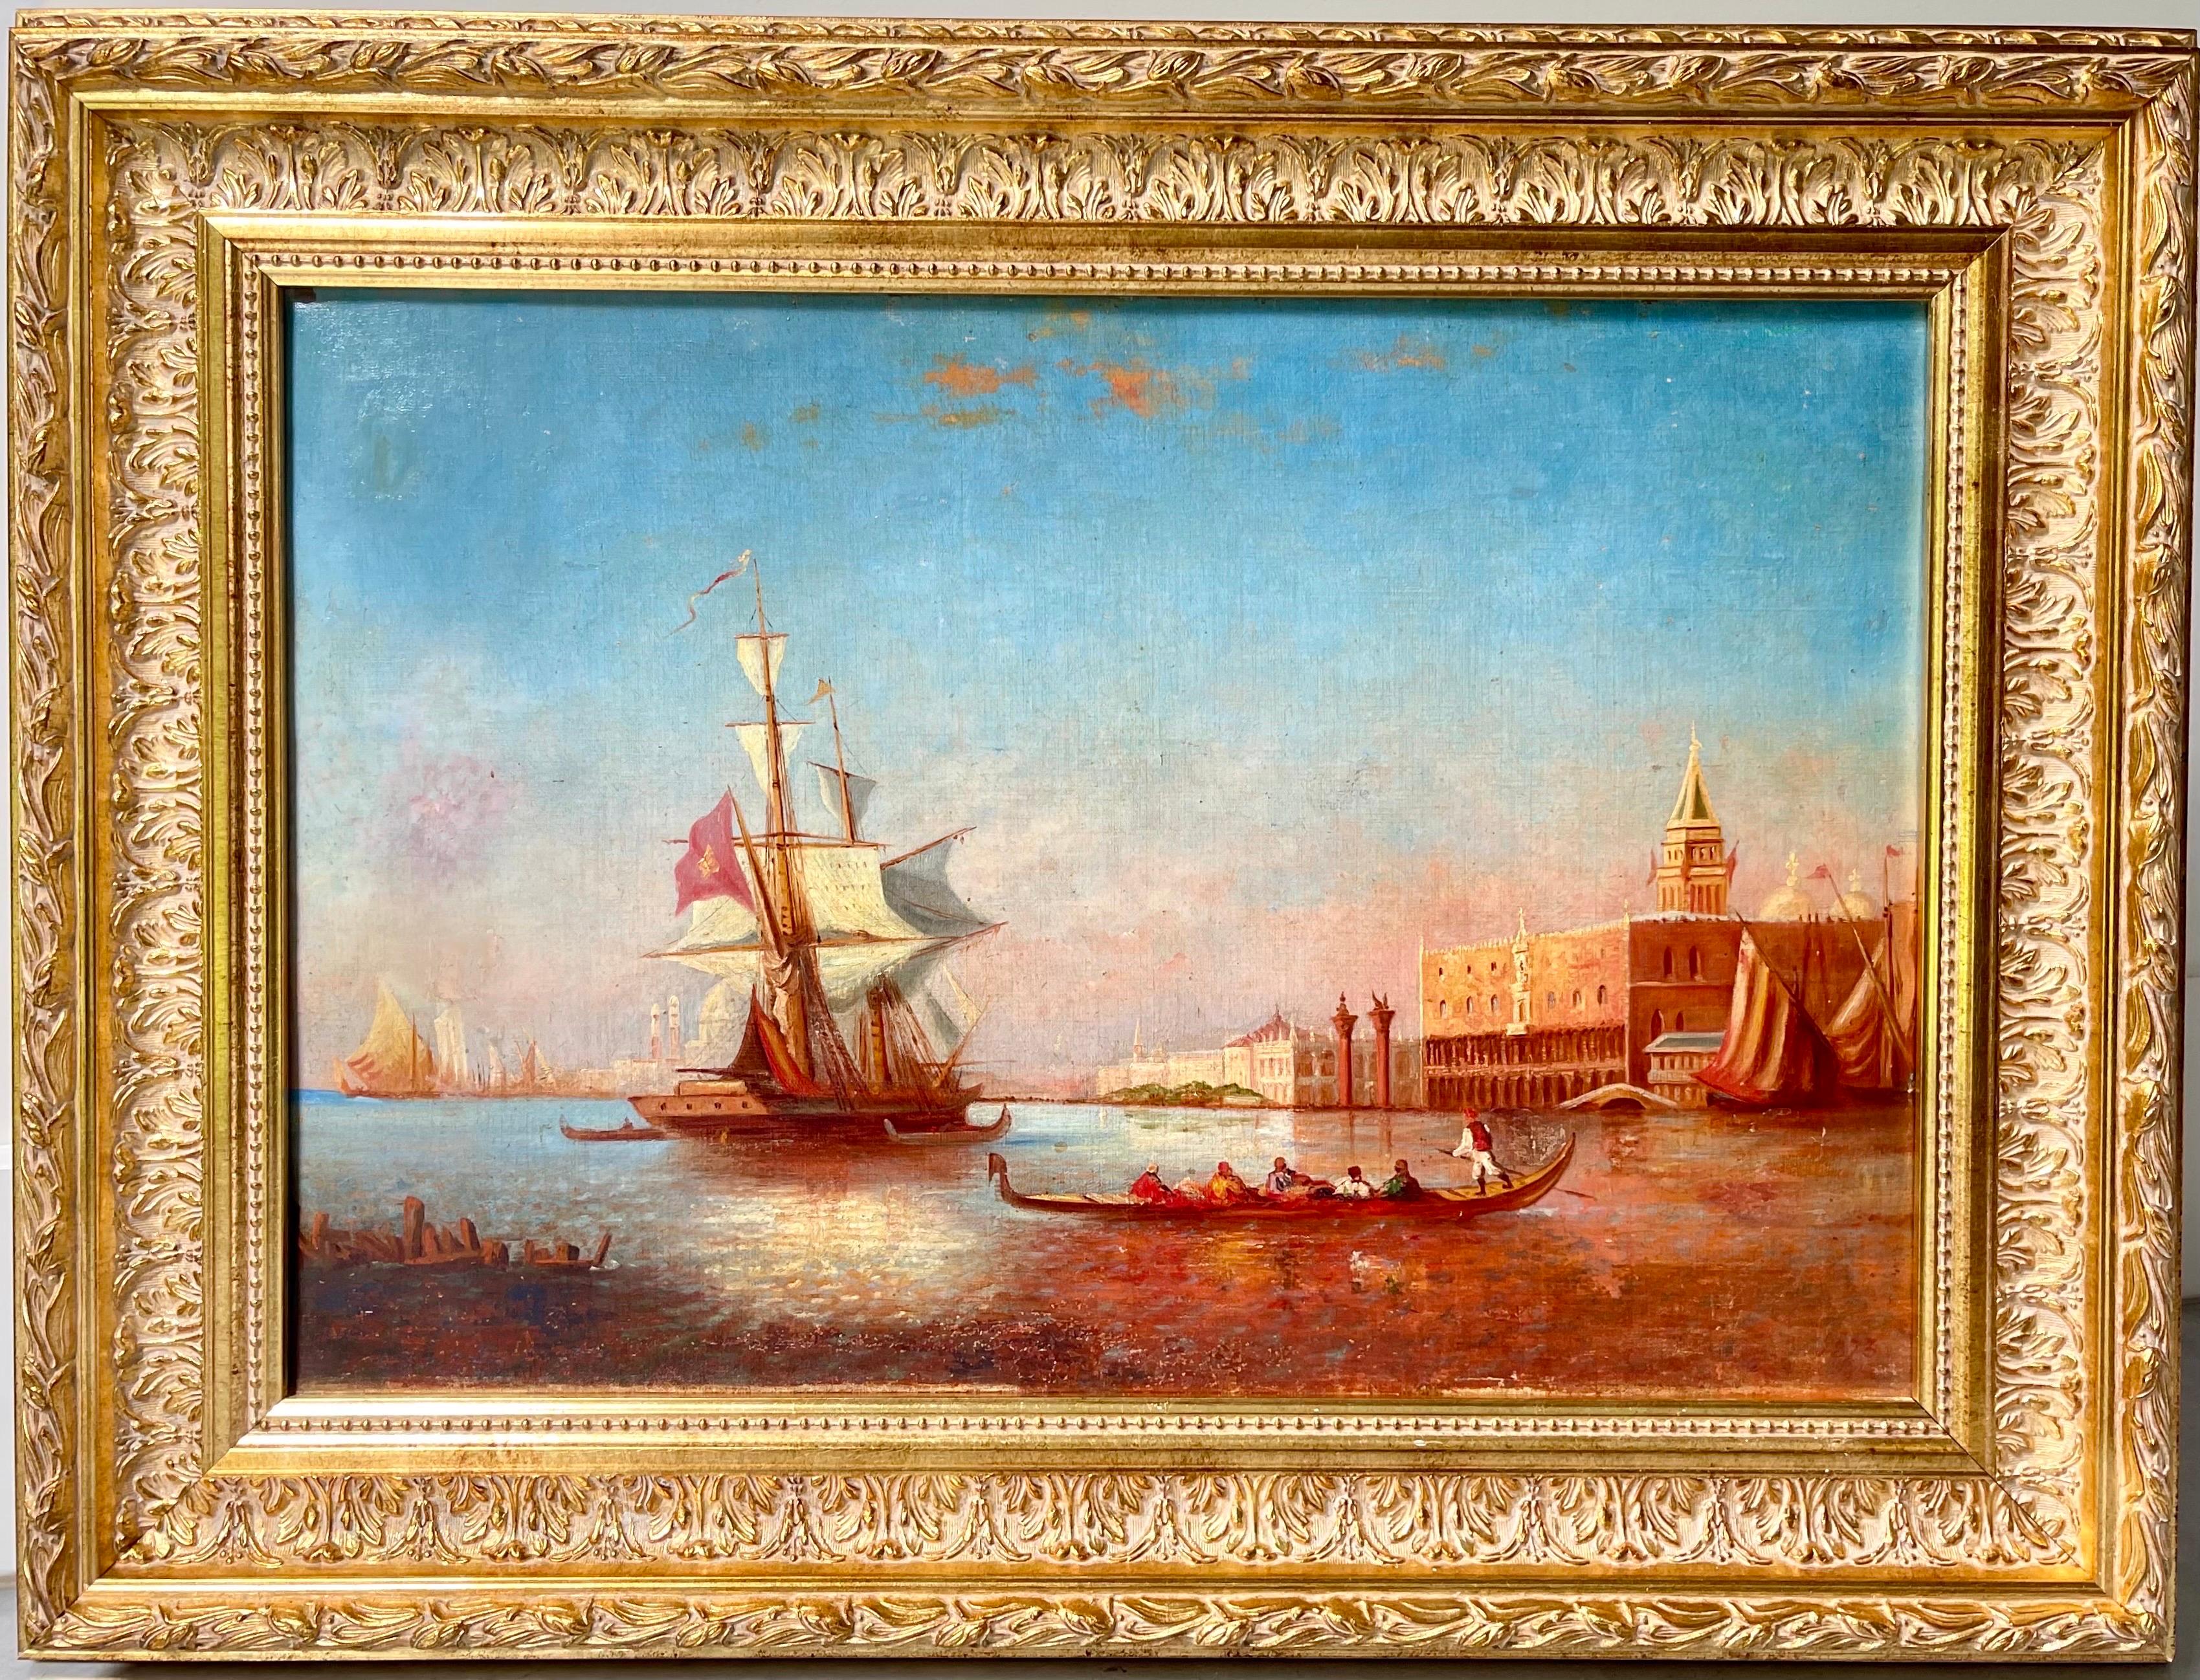 Bouchet Landscape Painting - 19th century romantic French painting - View of Venice - Ziem San Marco